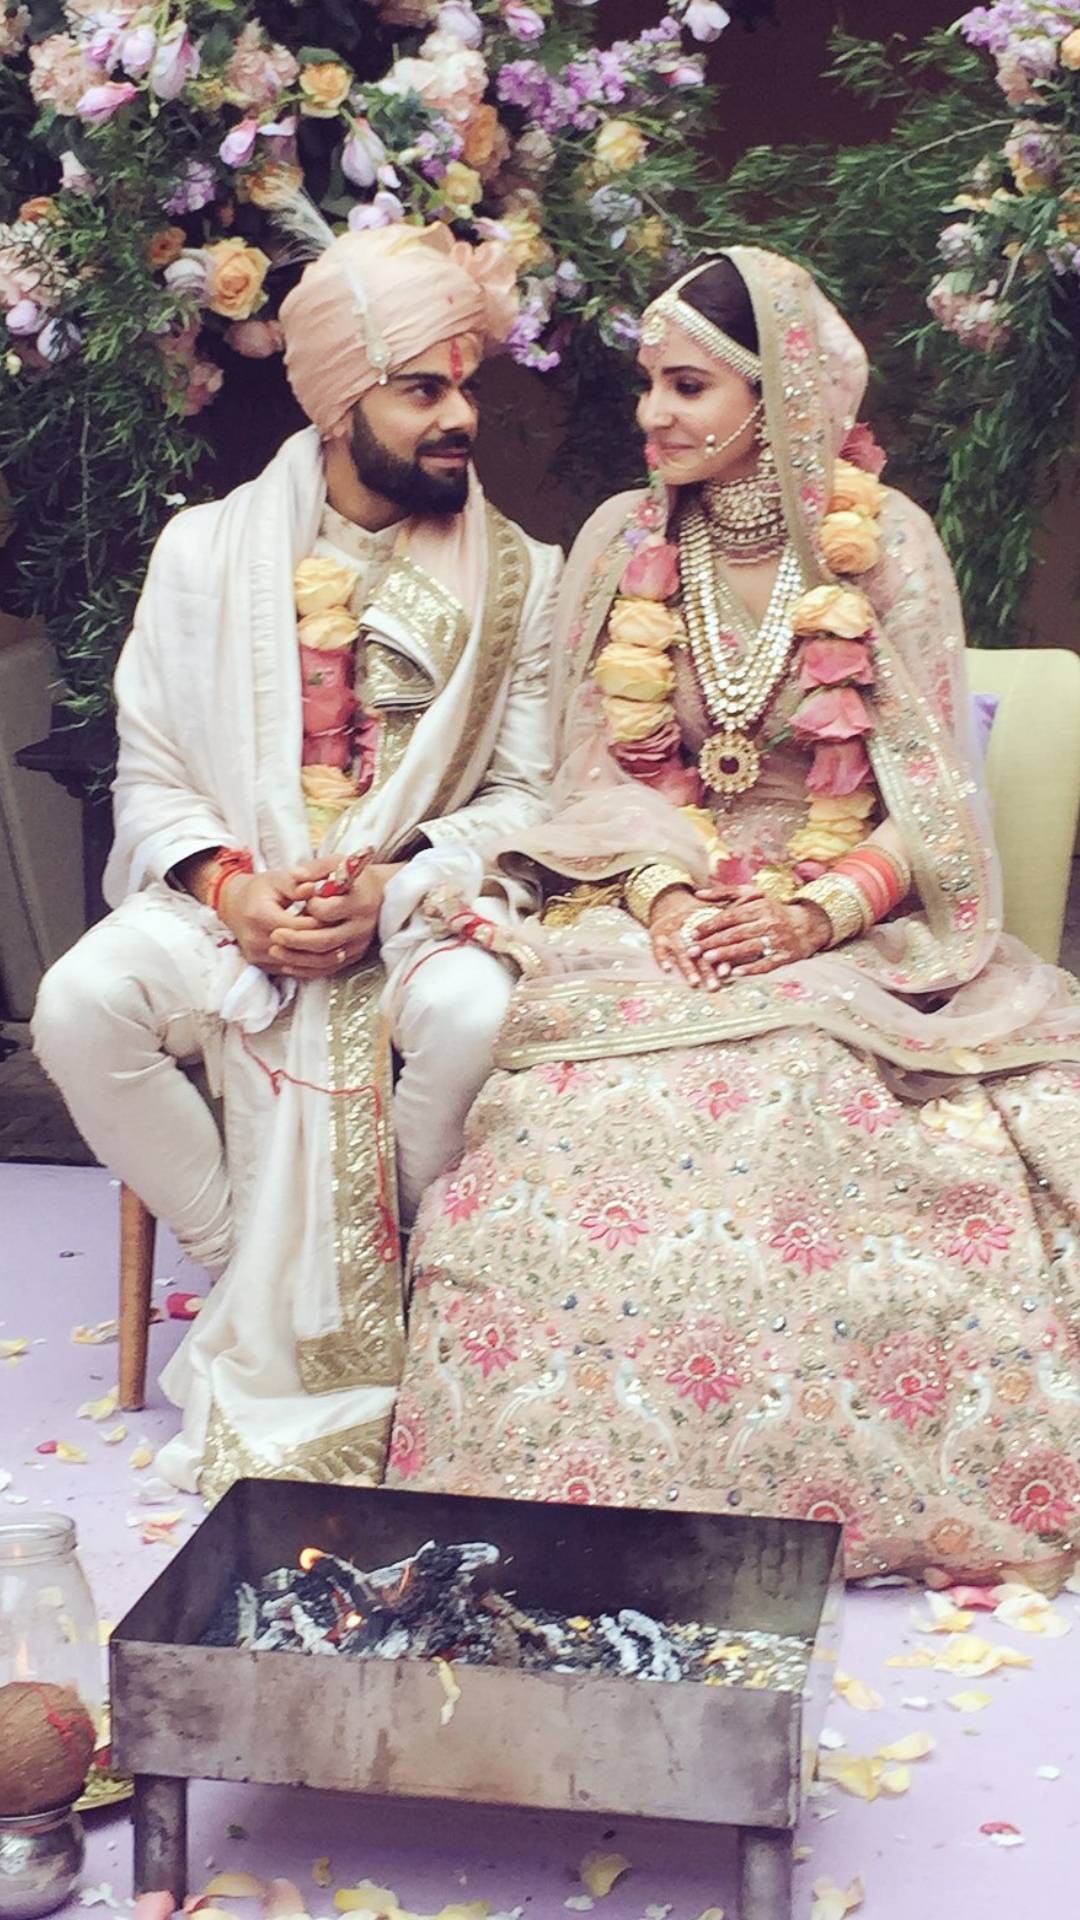 Anushka Sharma wore Sabyasachi wedding lehenga